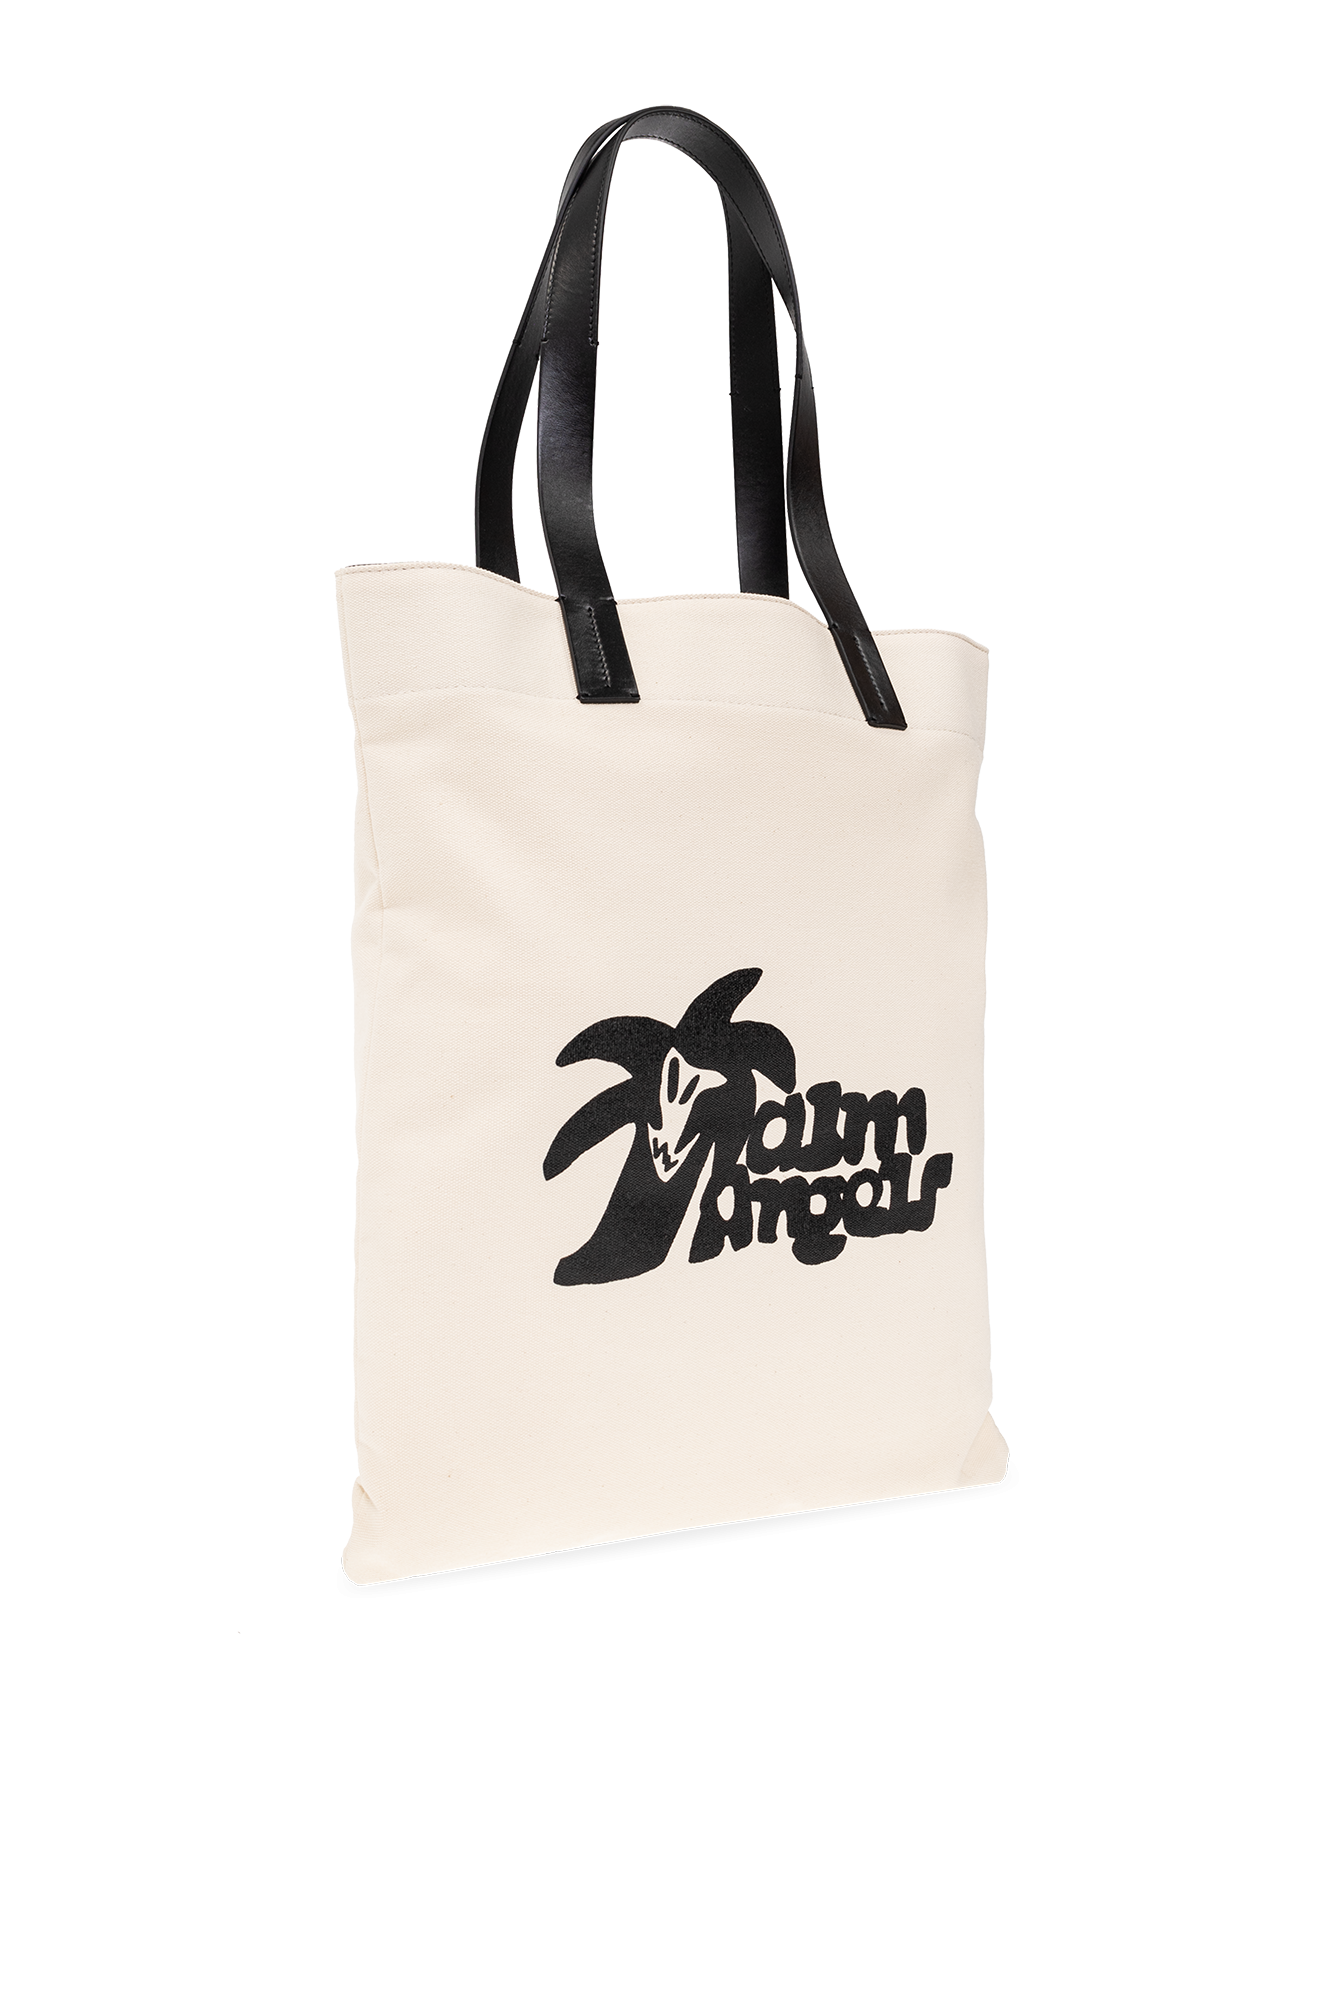 Palm Angels Shopper E1YWABA3 bag with logo